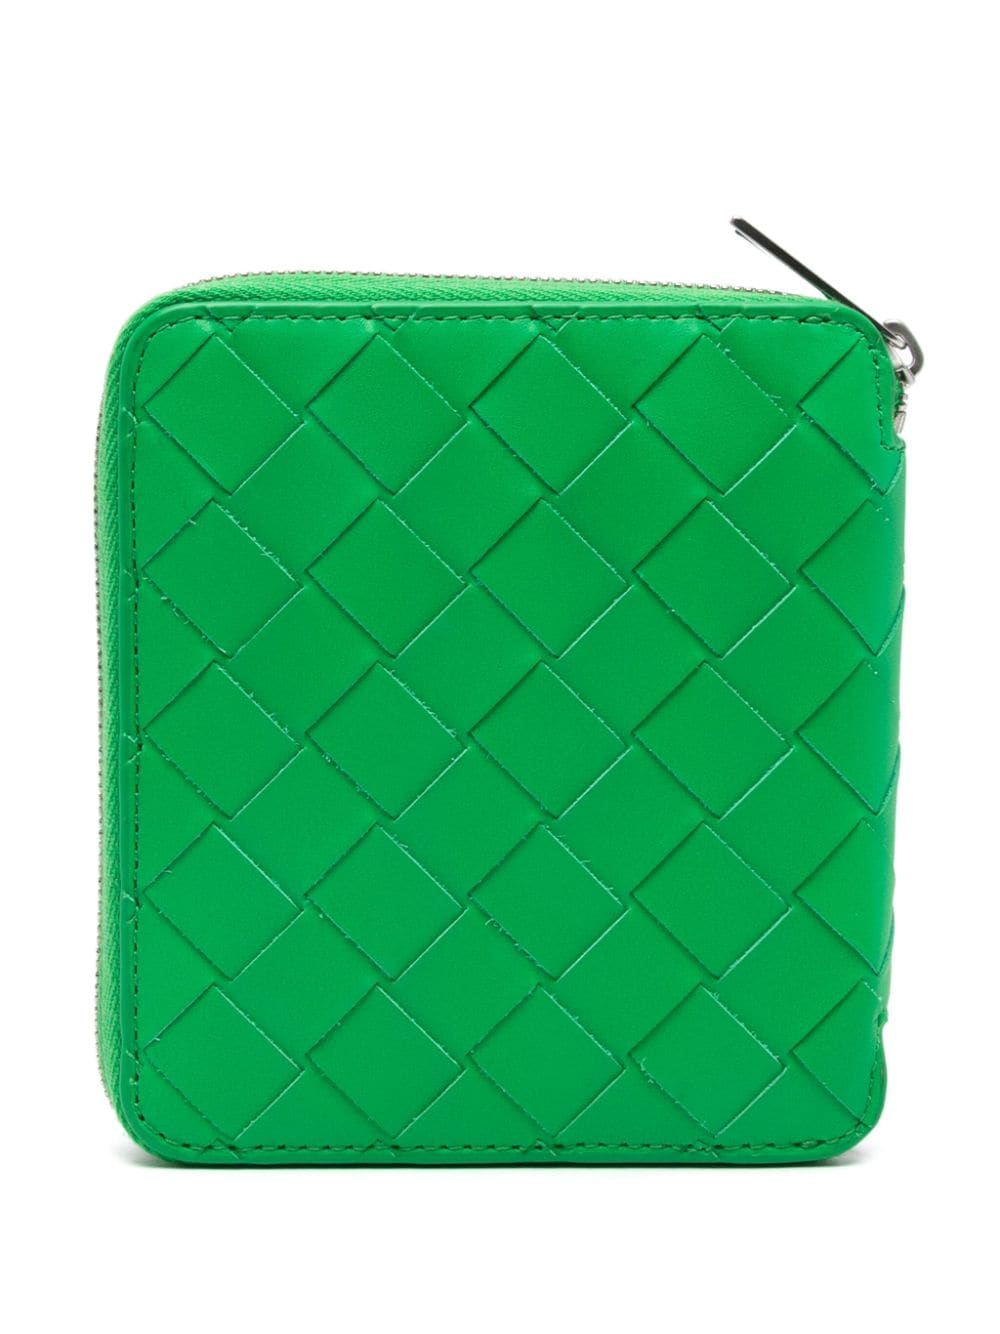 Bottega Veneta Compact Zip Around leather wallet - Groen